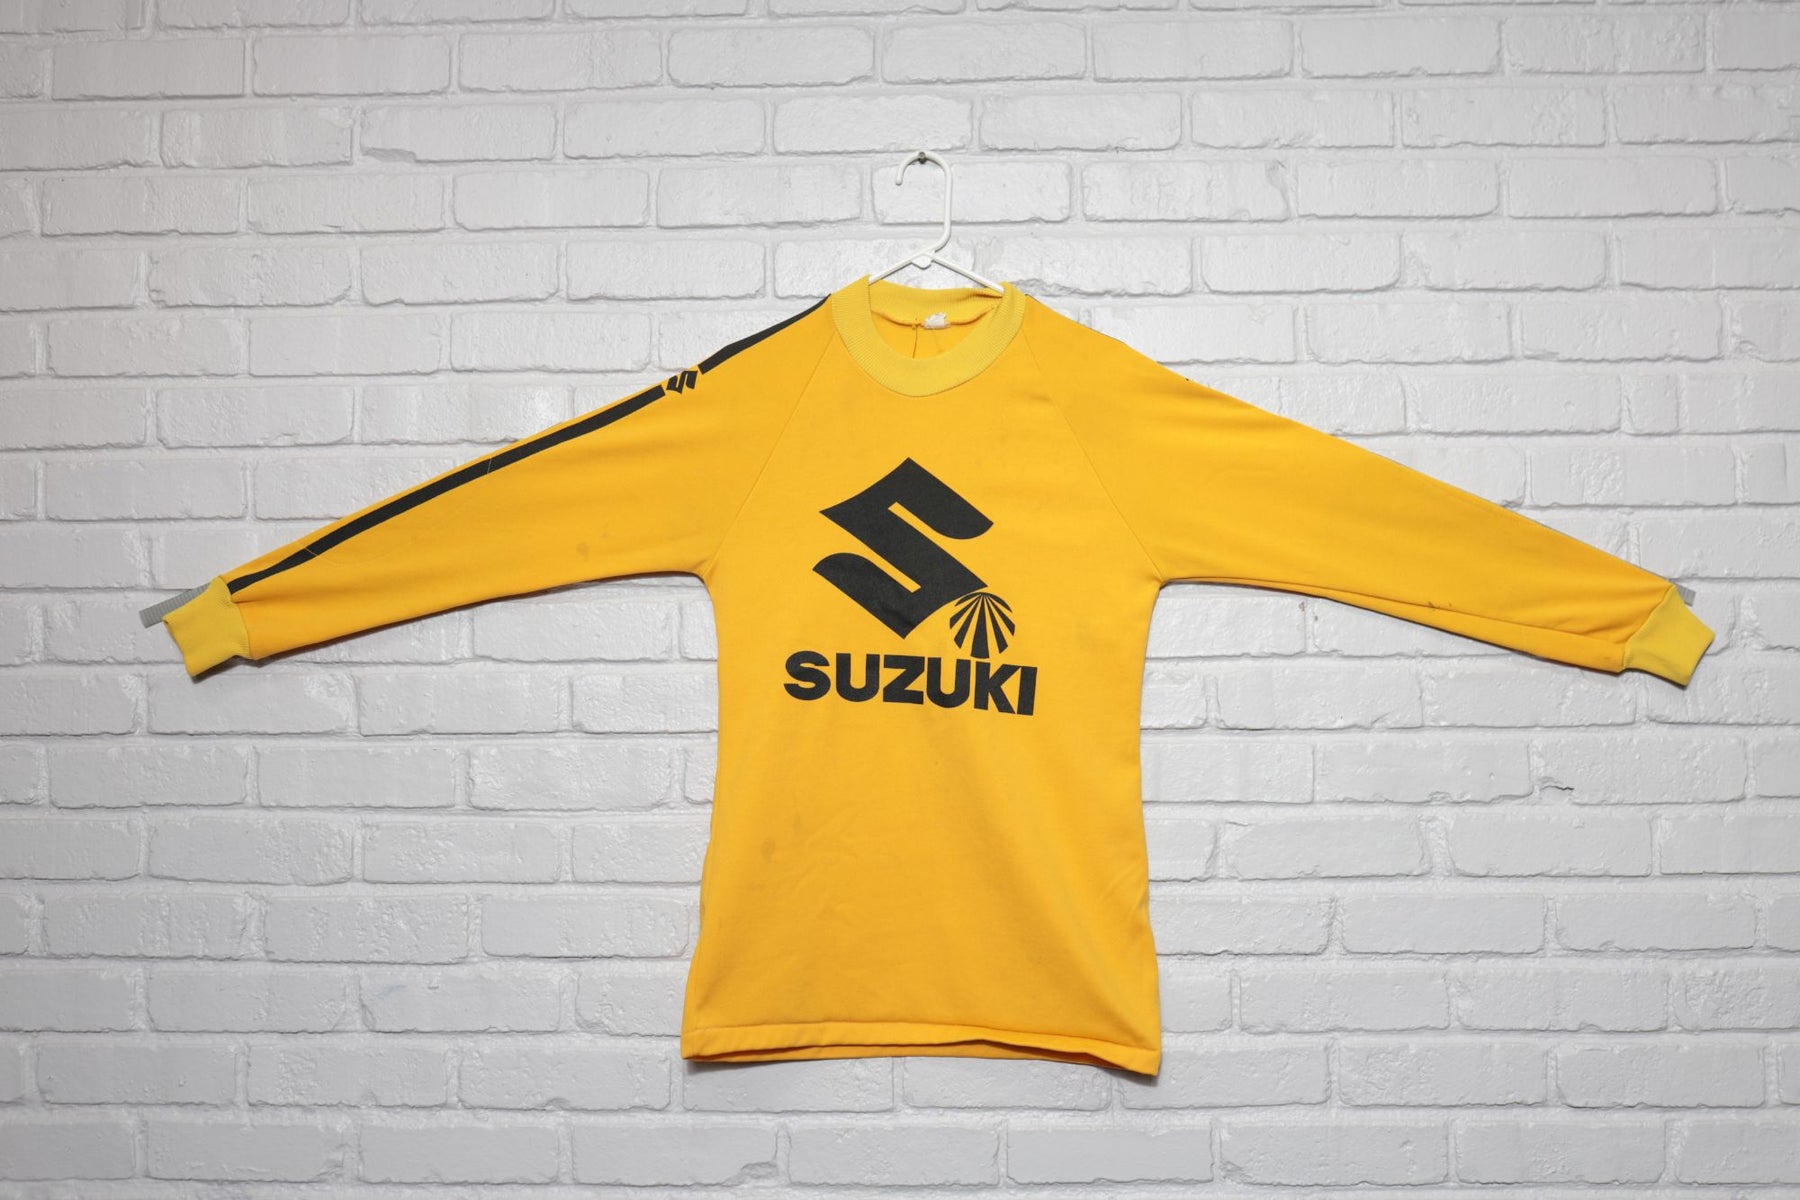 70s suzuki motocross jersey size medium – Recollect Ltd.